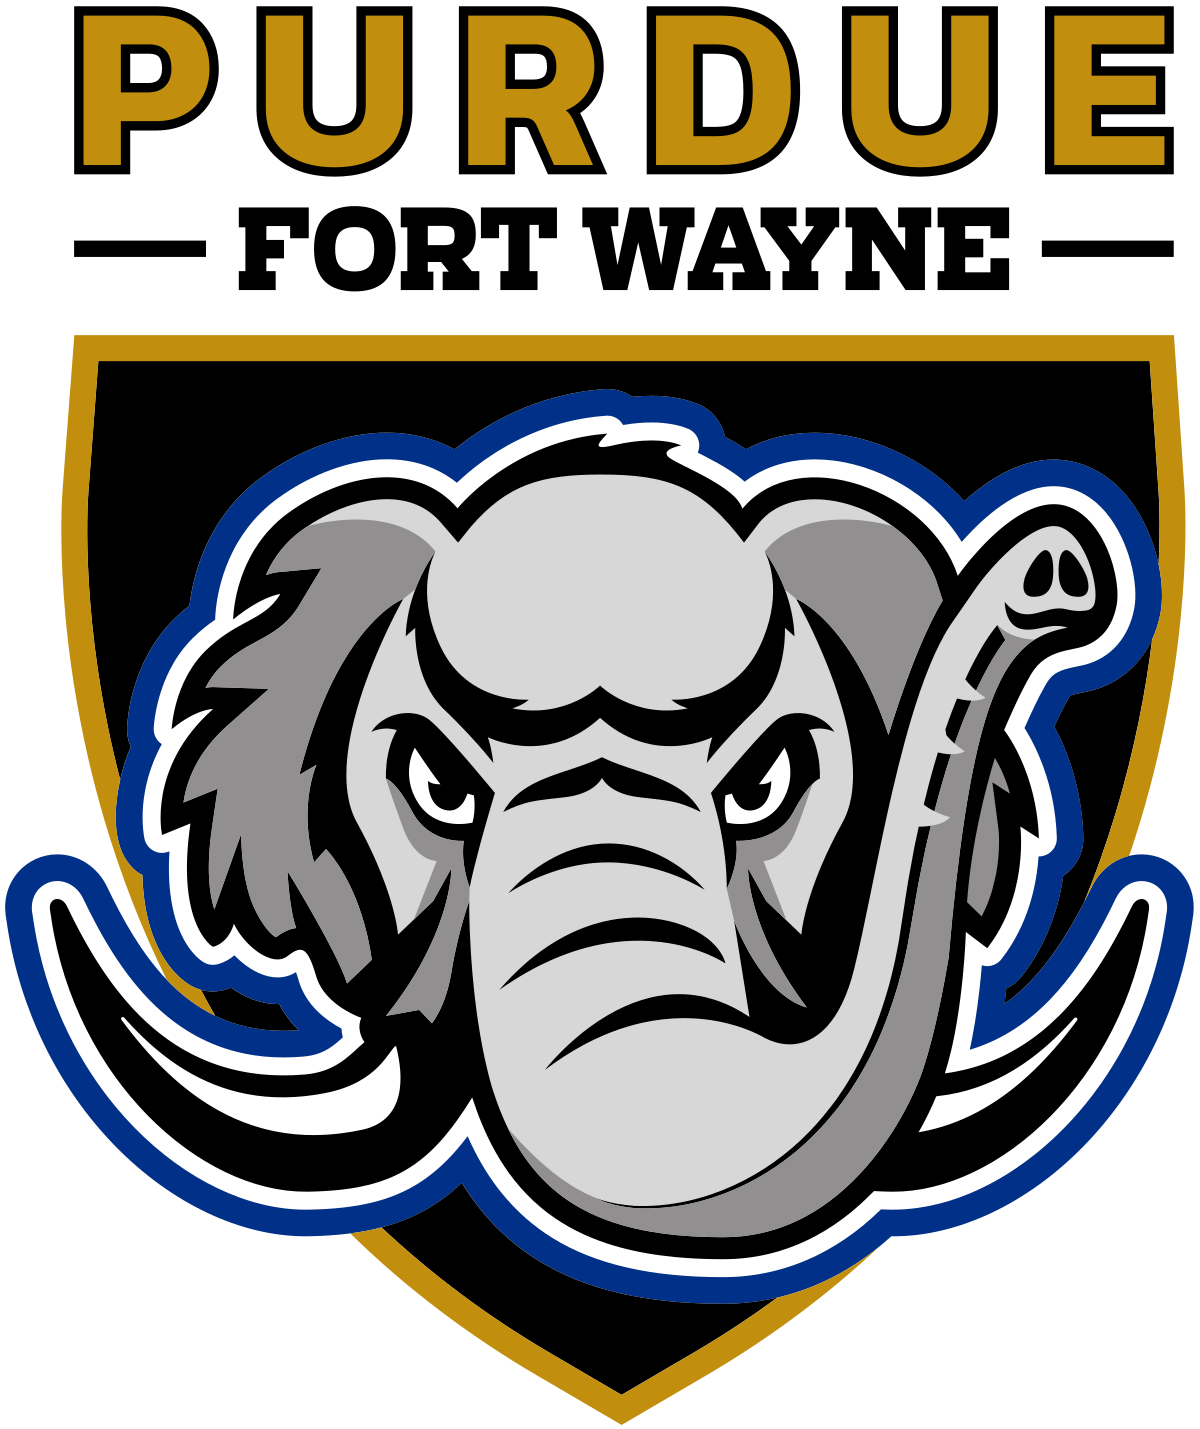 Purdue University Fort Wayne